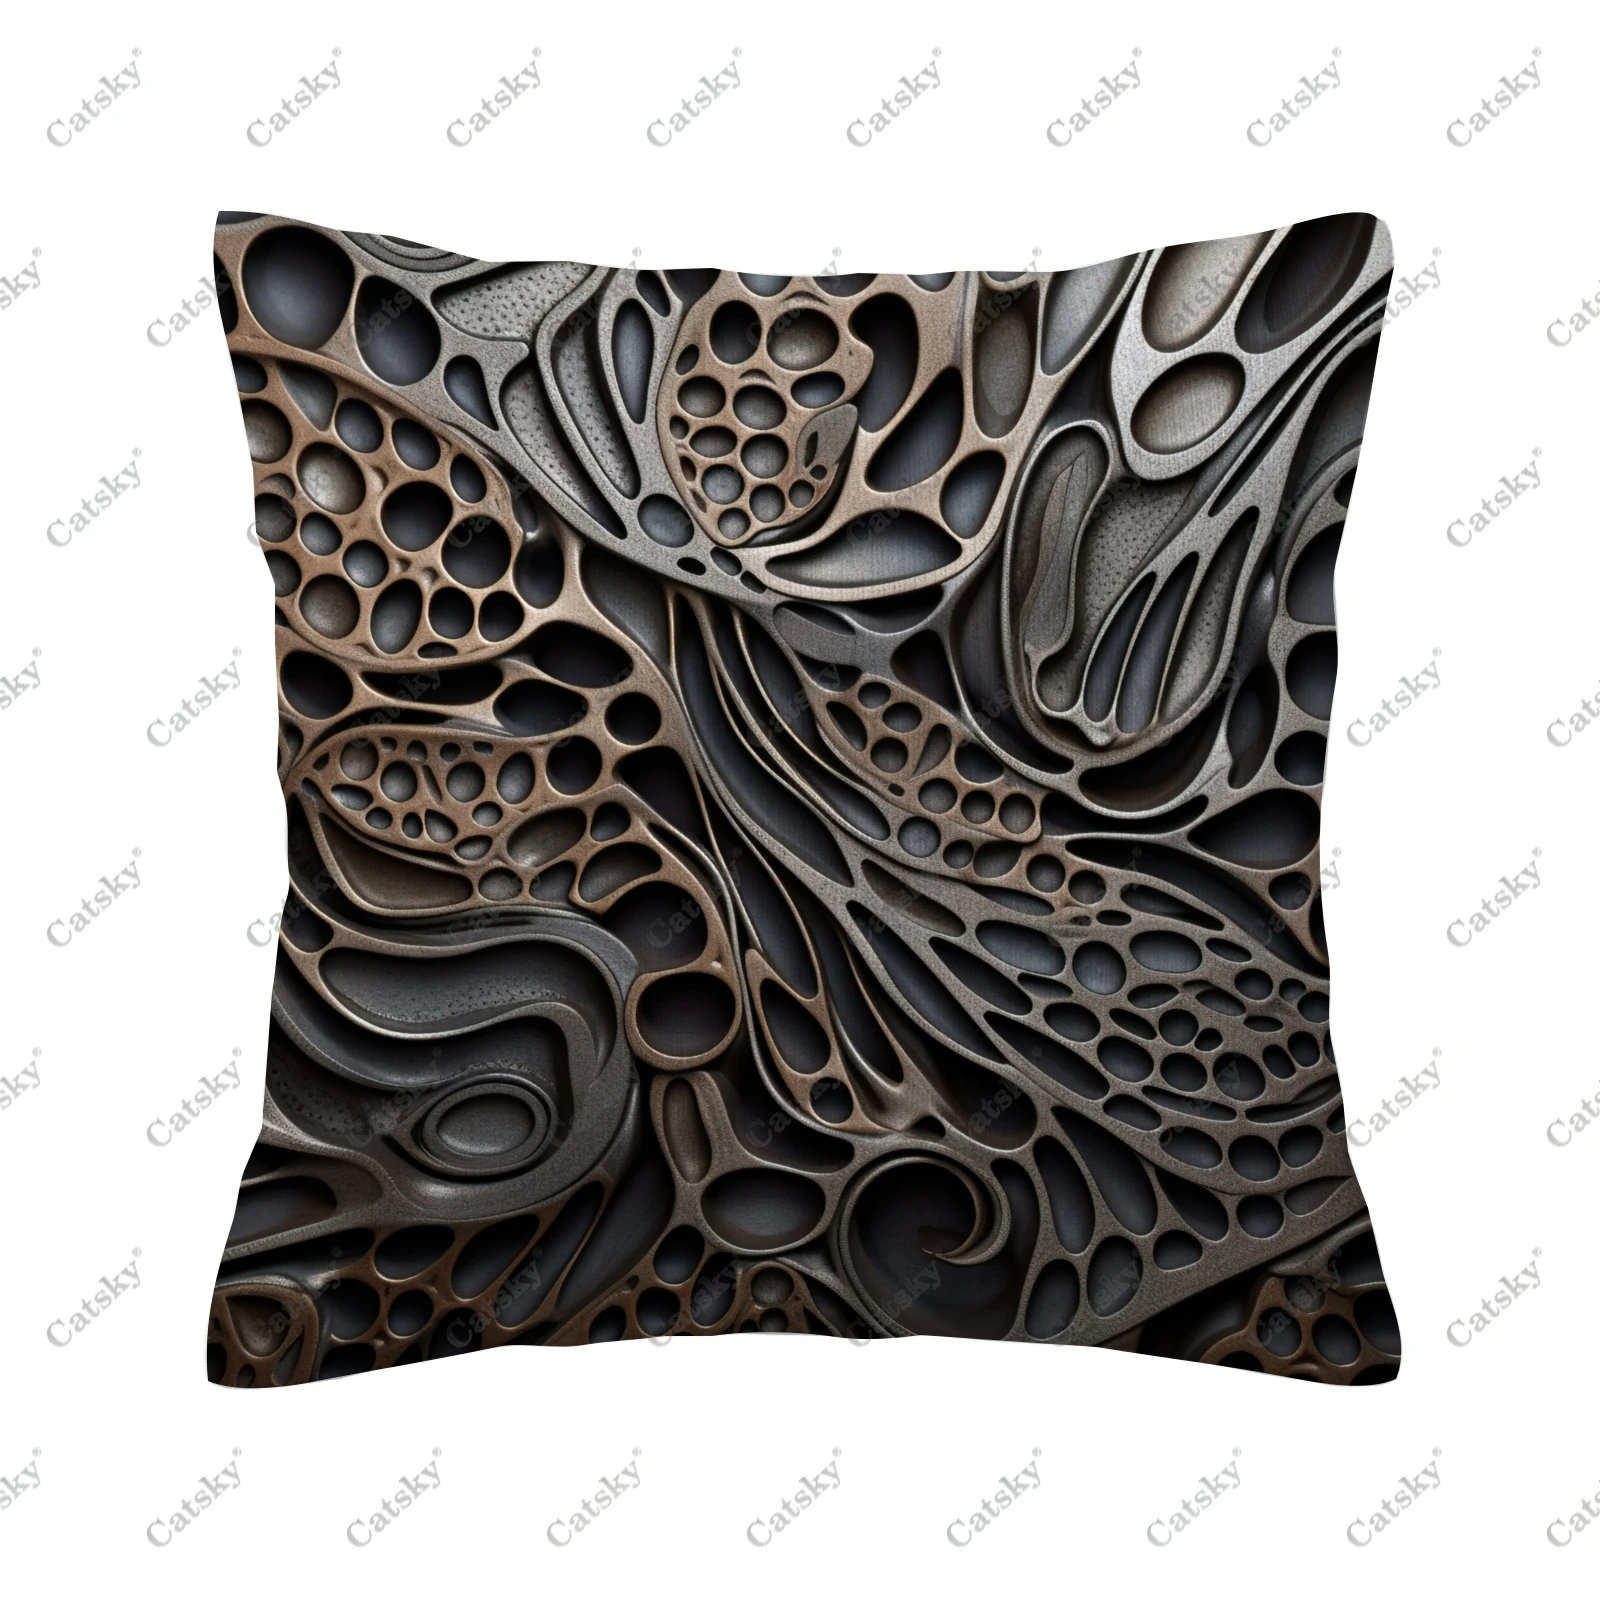 

Geometry Futuristic Metallic Cushion Cover Pillowcase Cool Asta Figure Throw Pillow Case for Home Decor Sofa Bed Pillow Cover